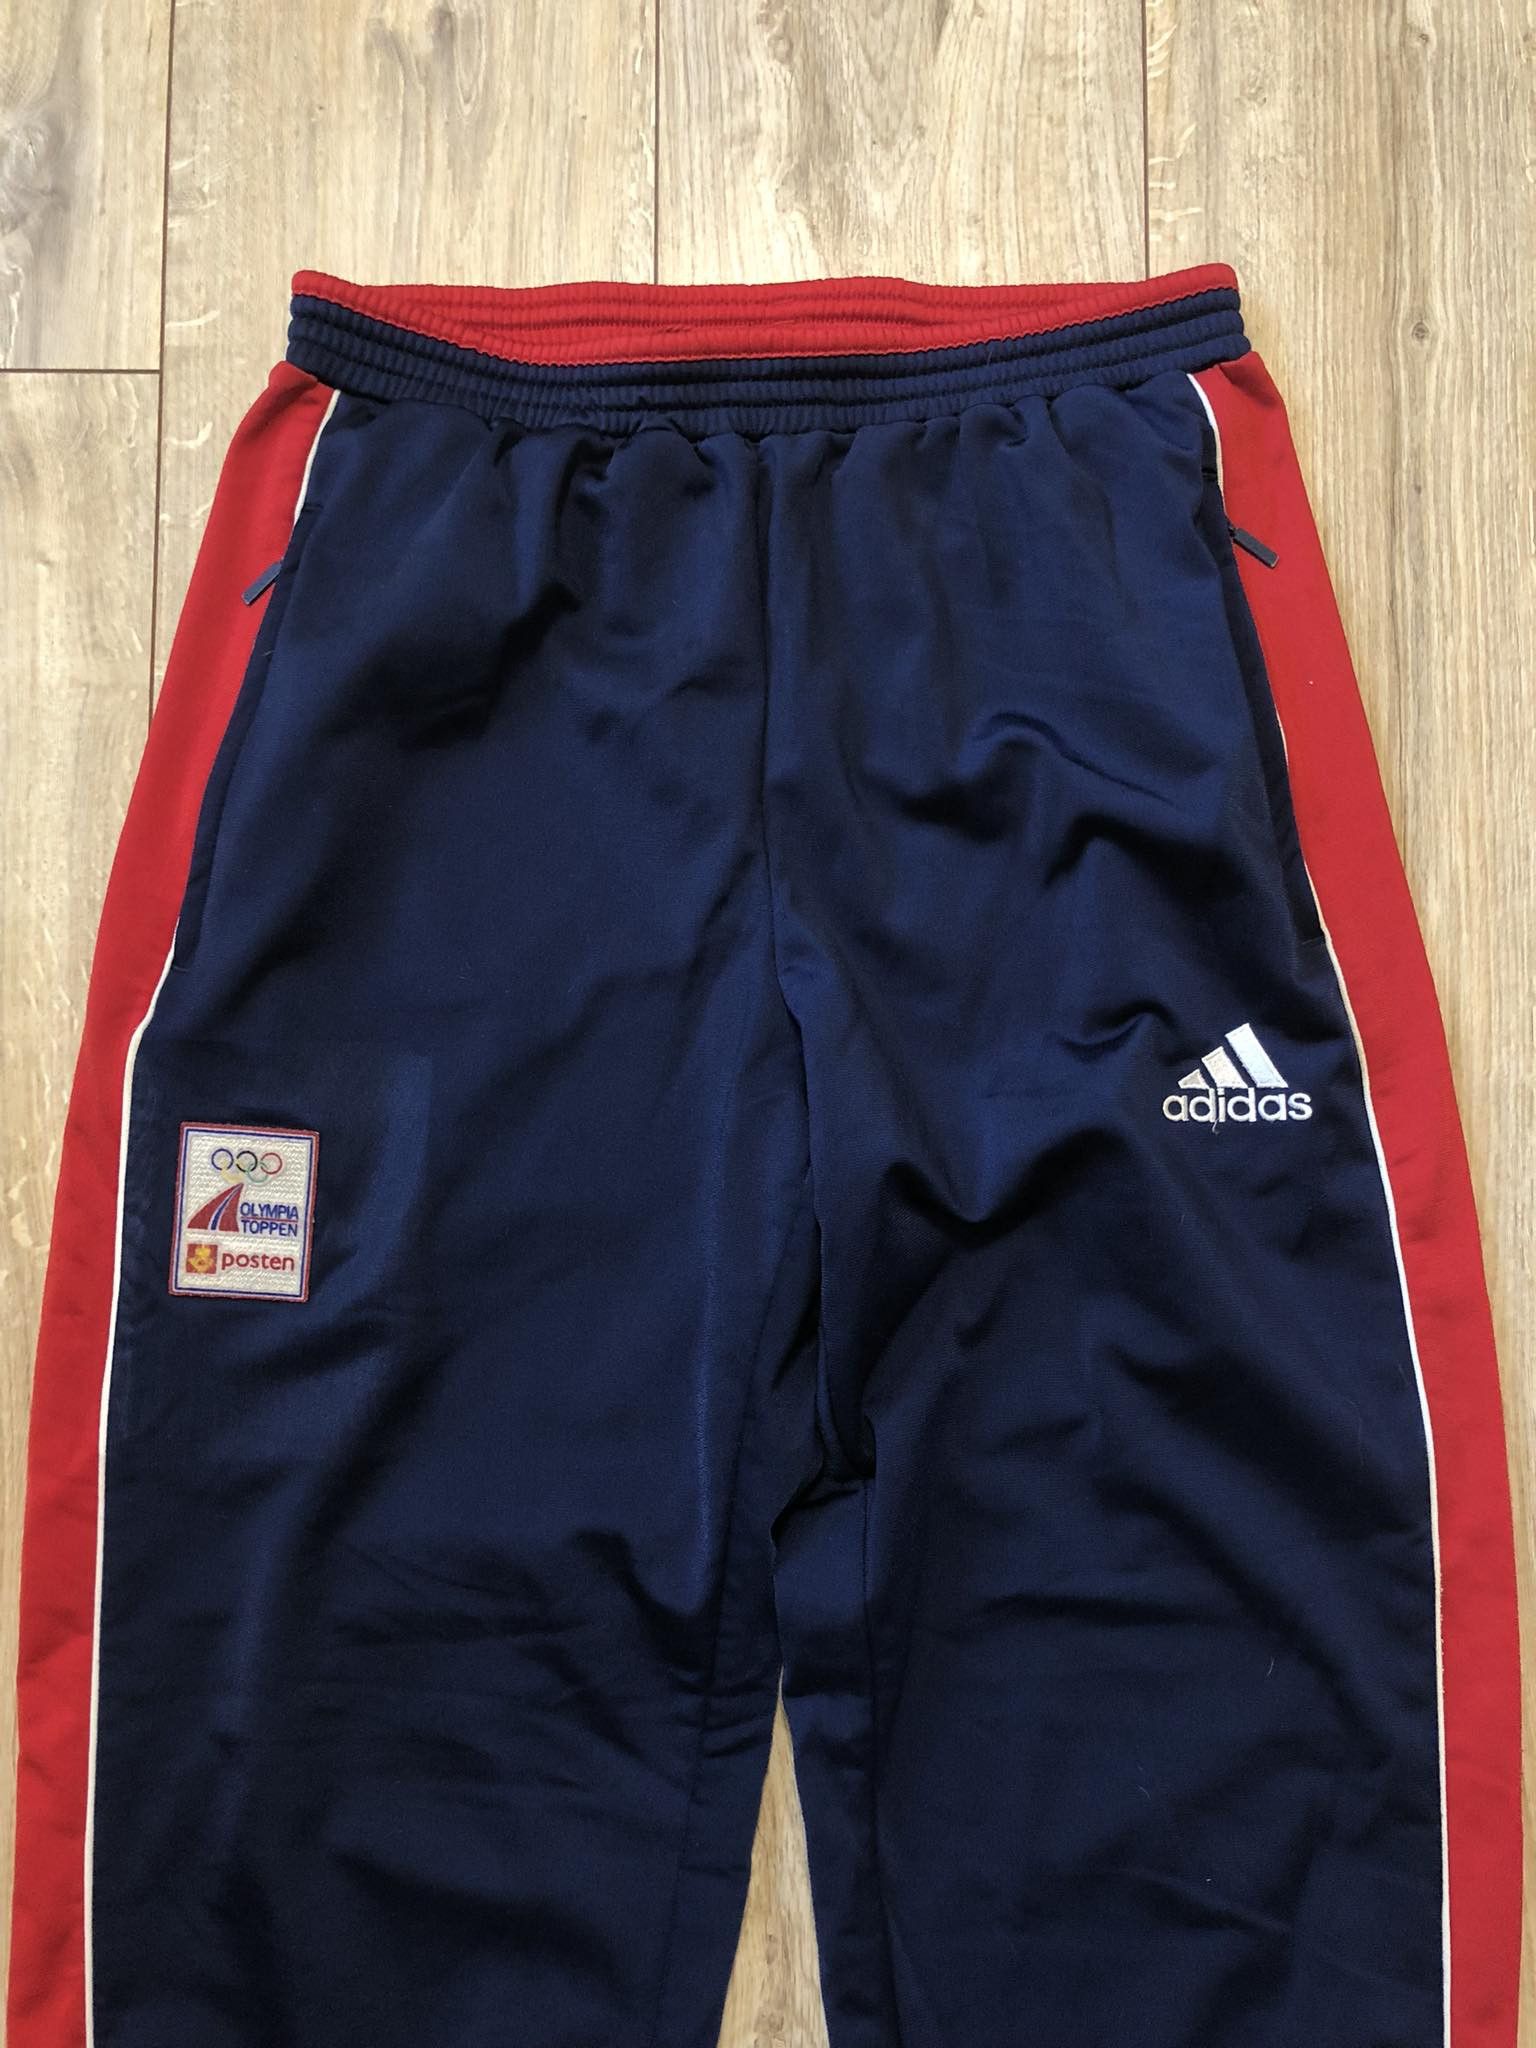 Adidas Adidas Olympia Toppen sweatpants vintage size M? 70s 80s Size US 32 / EU 48 - 3 Thumbnail